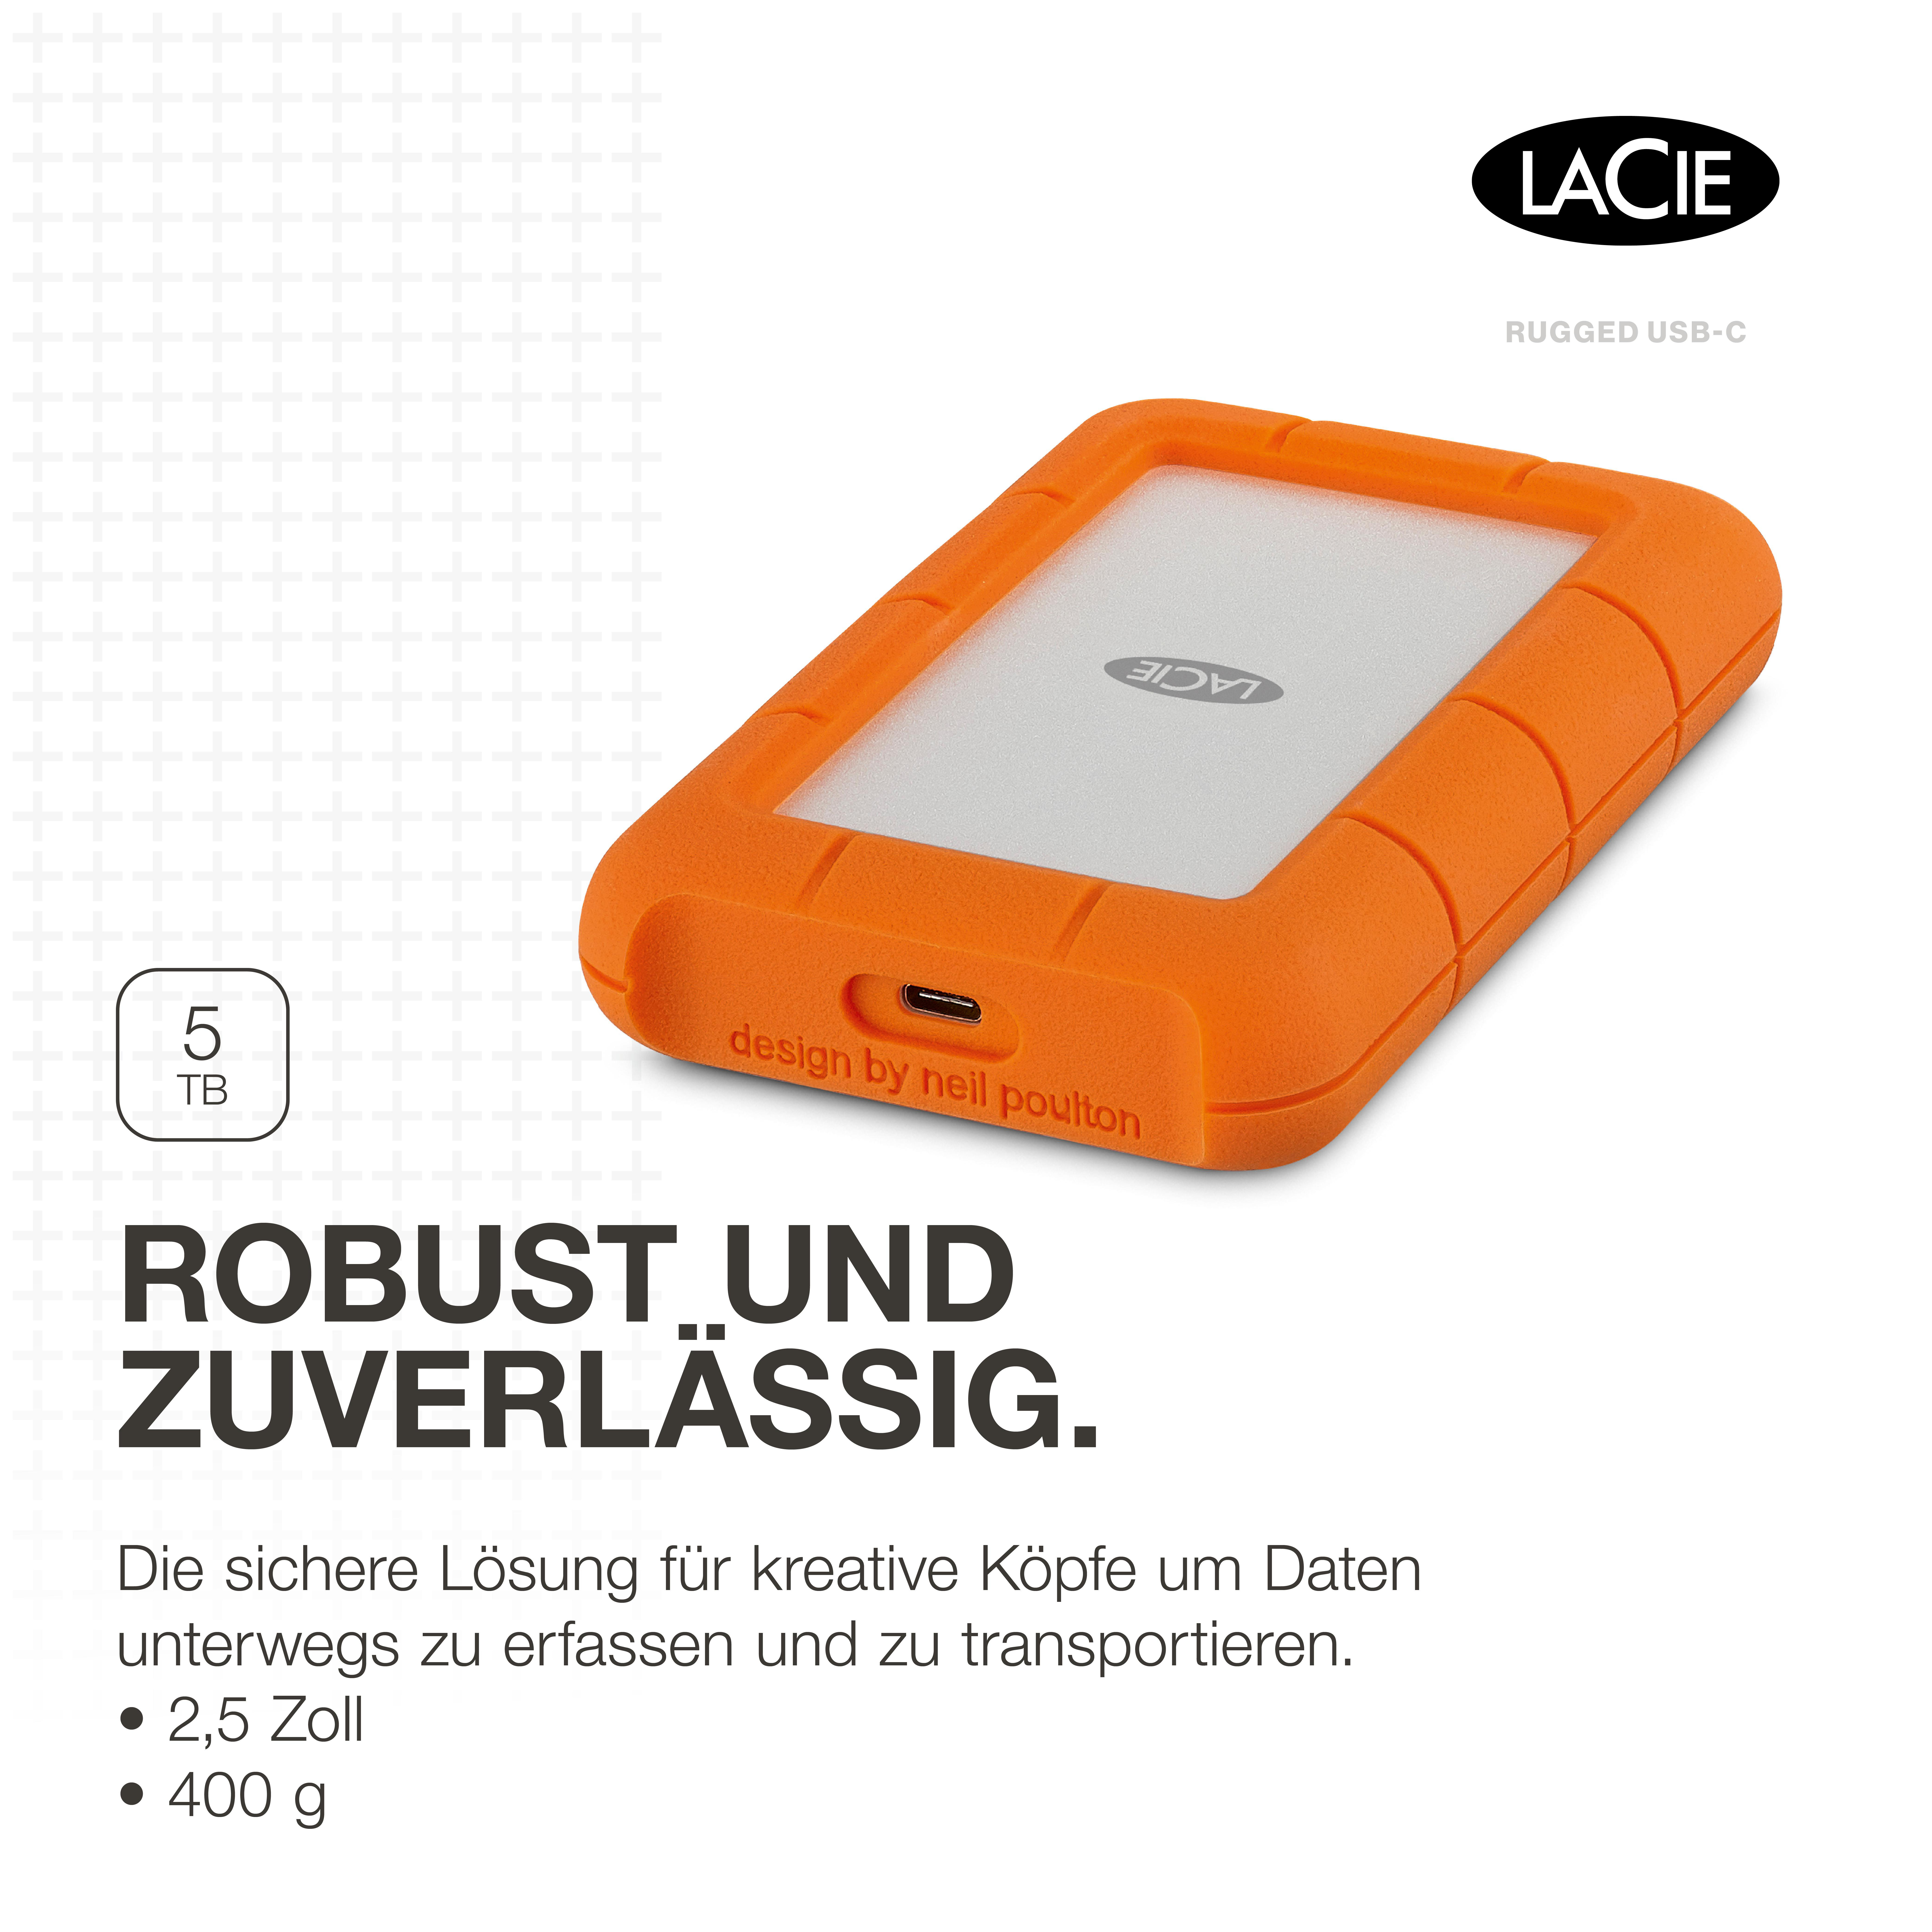 LACIE Rugged USB-C Festplatte, HDD, 2,5 Zoll, Silber/Orange TB extern, 5